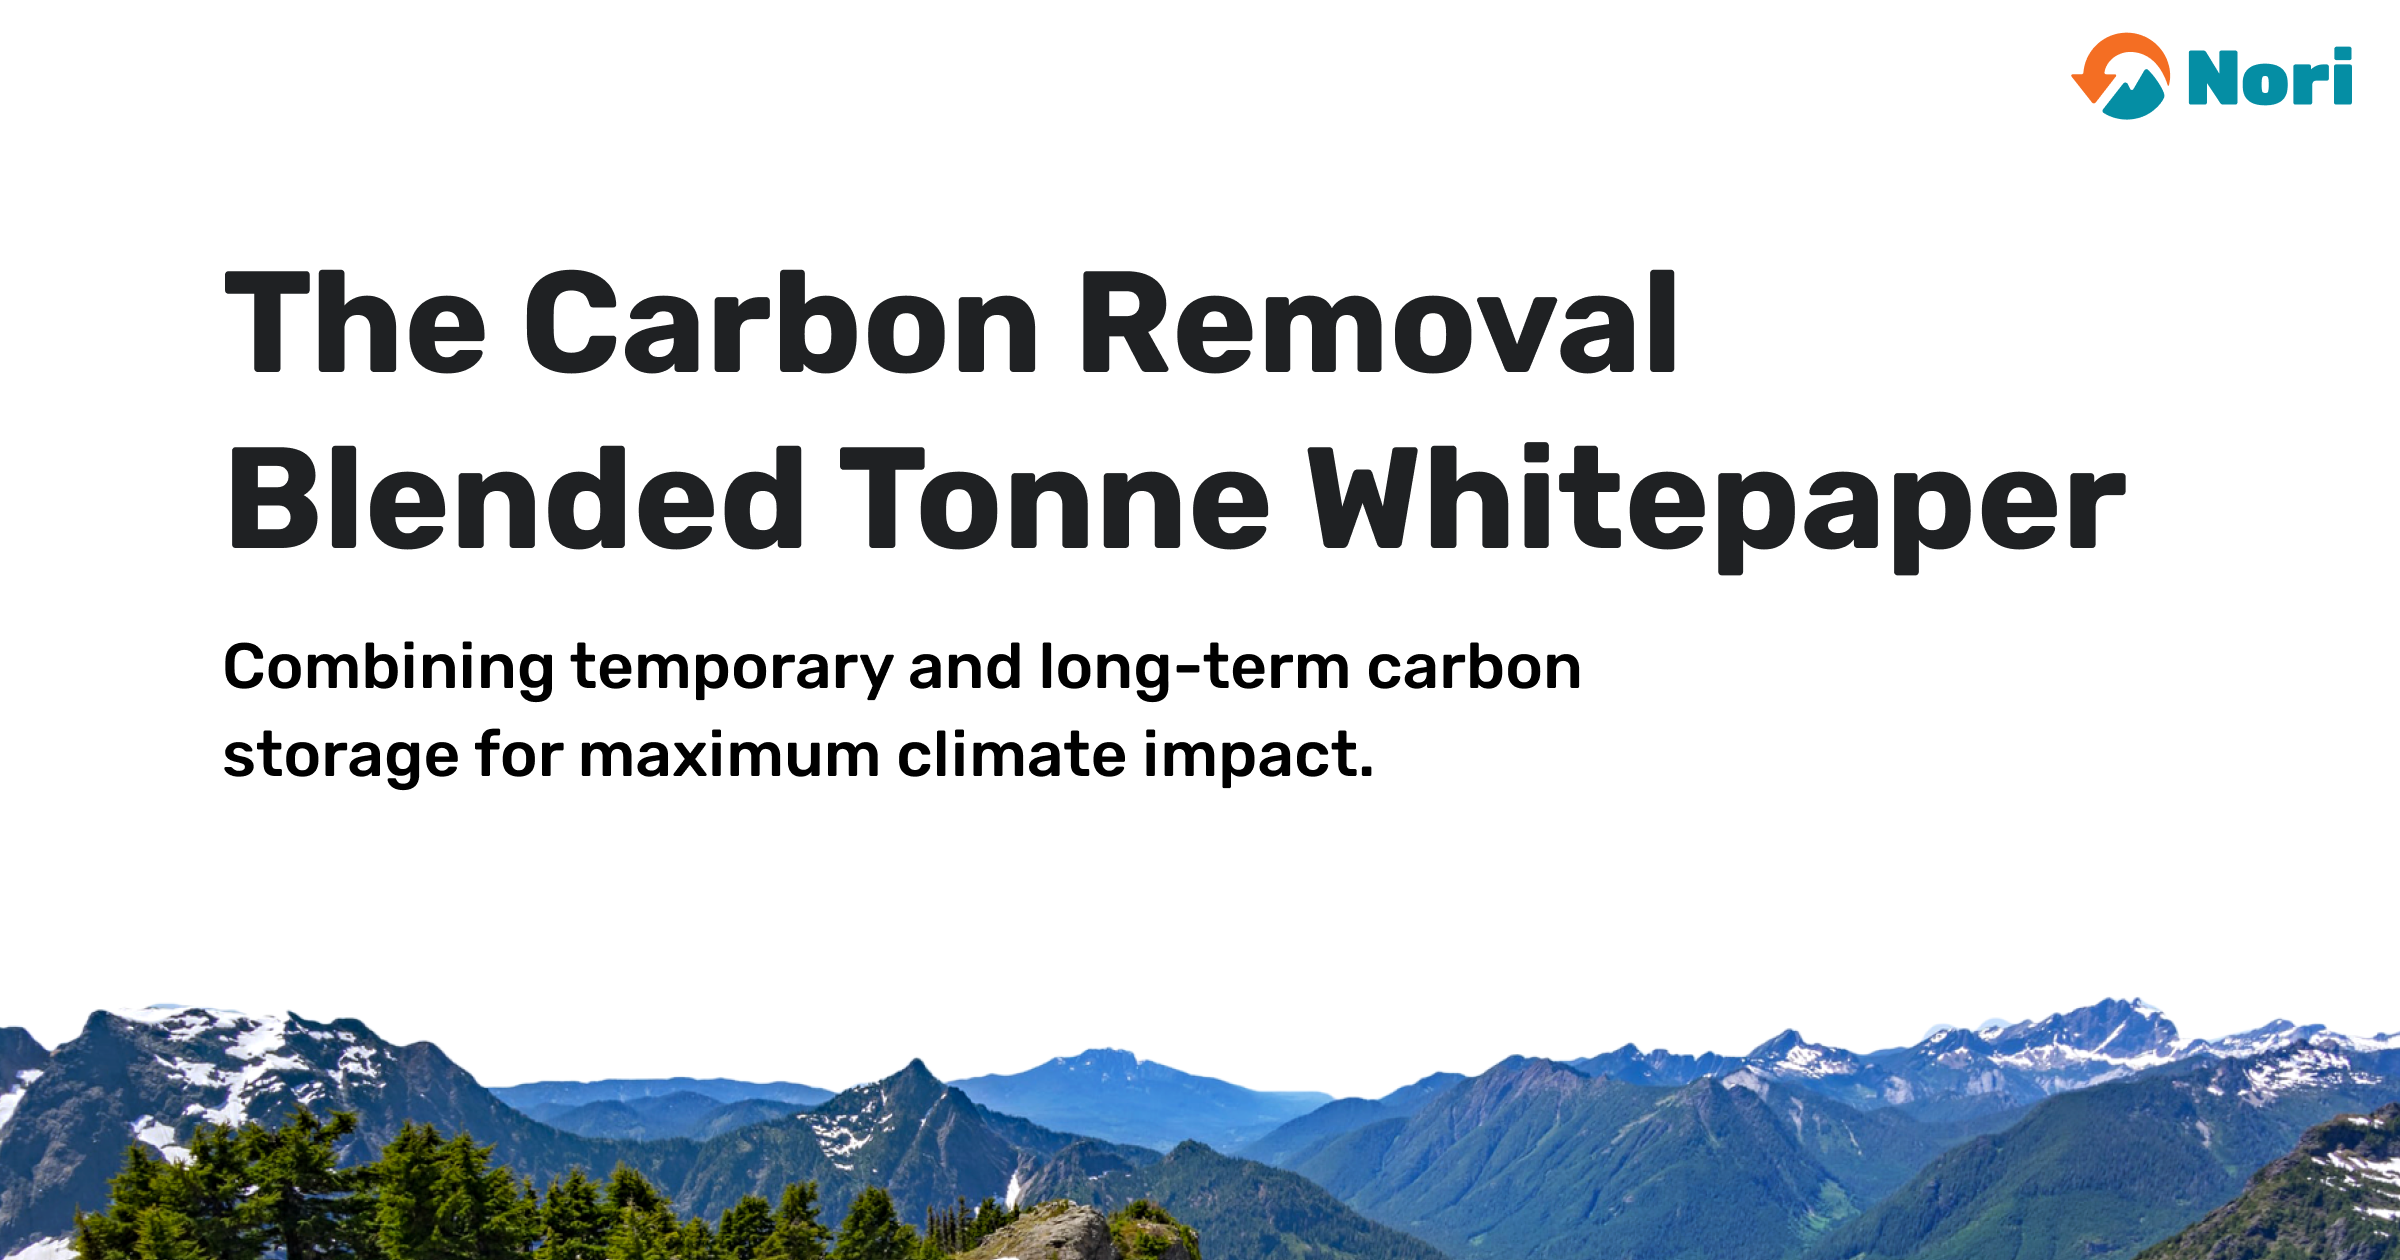 The Carbon Removal Blended Tonne Whitepaper